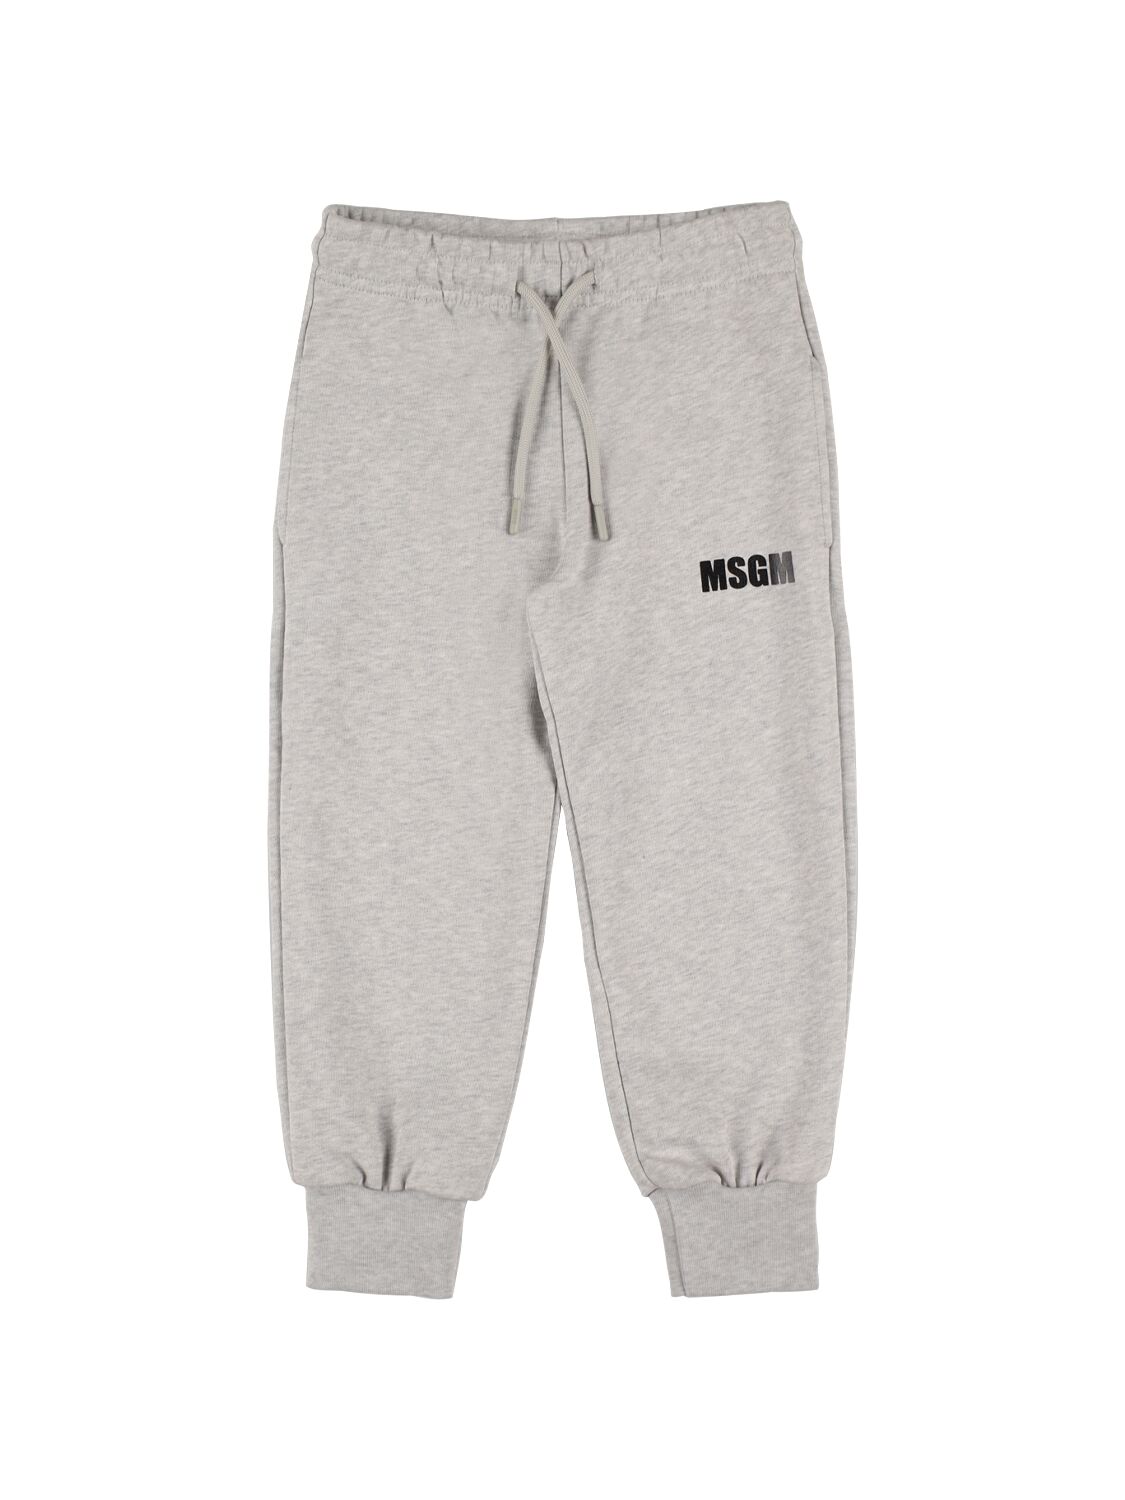 Msgm Kids' Cotton Sweatpants In Grey